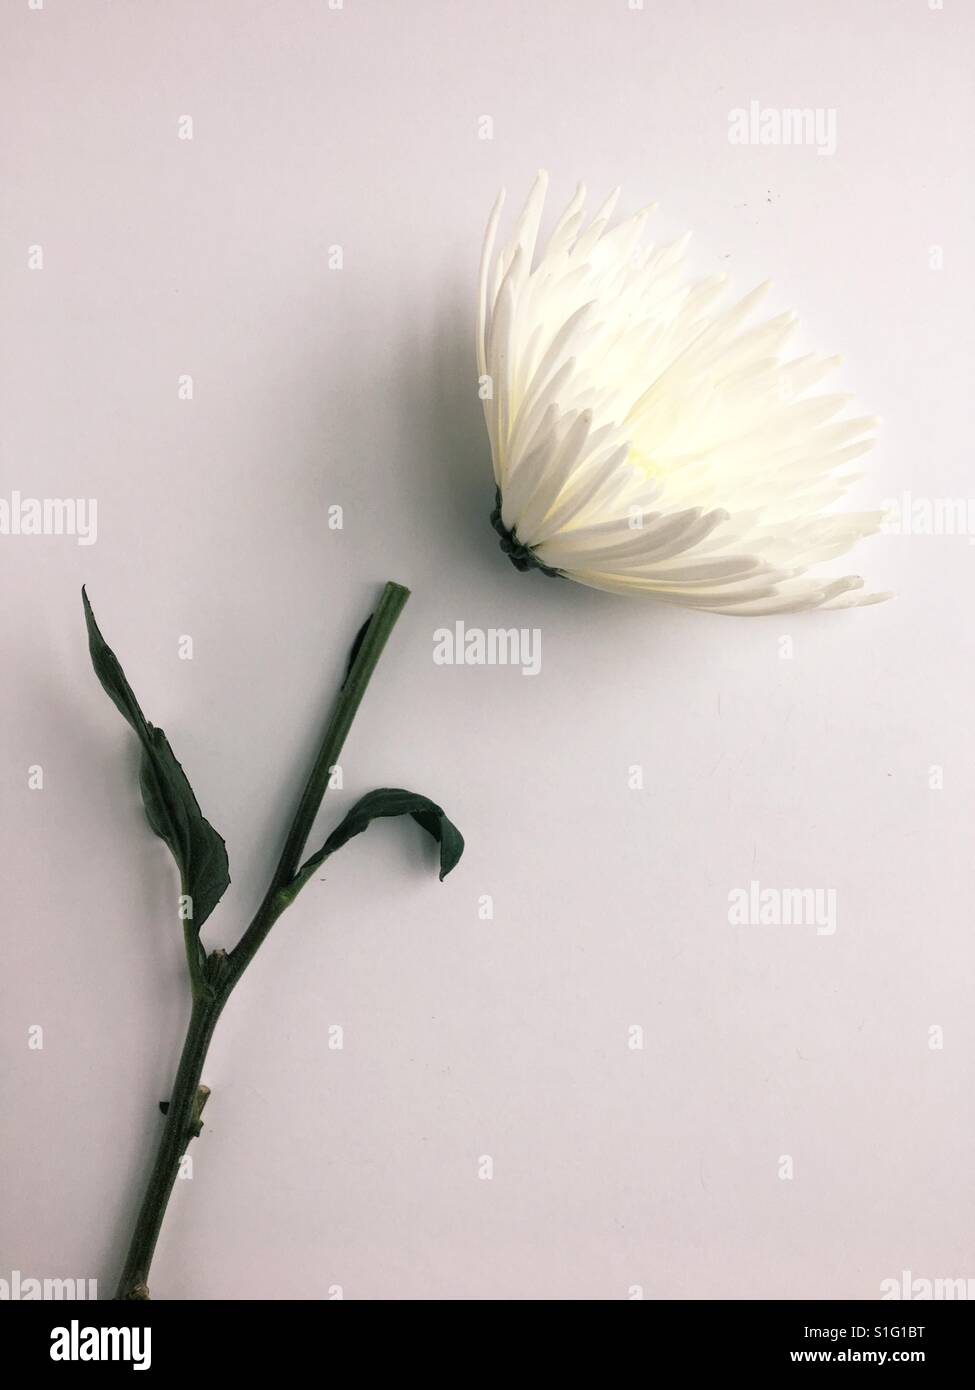 White spider mum flower illustrating loss/change/growth. Stock Photo